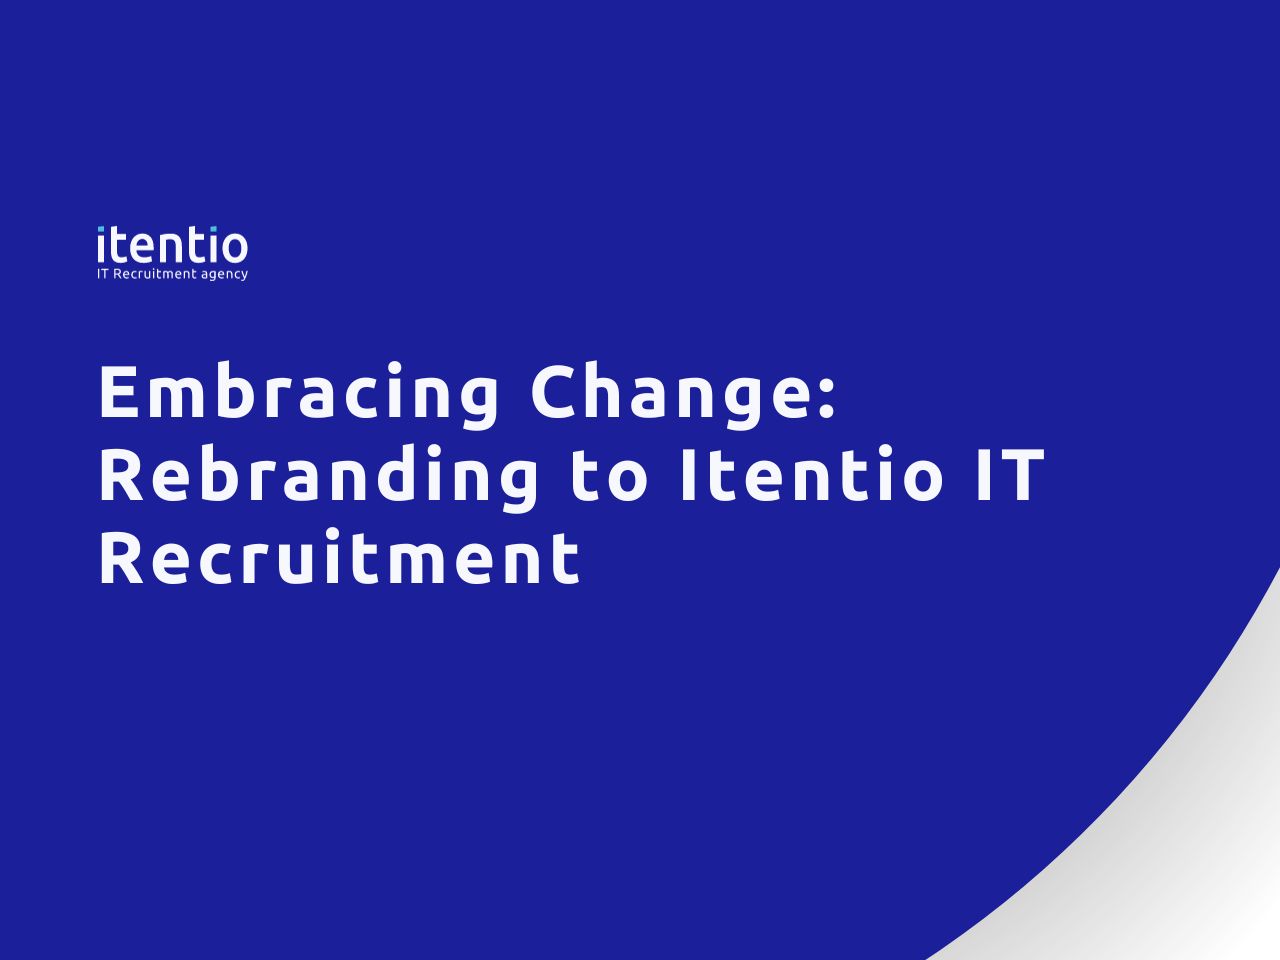 Embracing Change: Rebranding to Itentio IT Recruitment